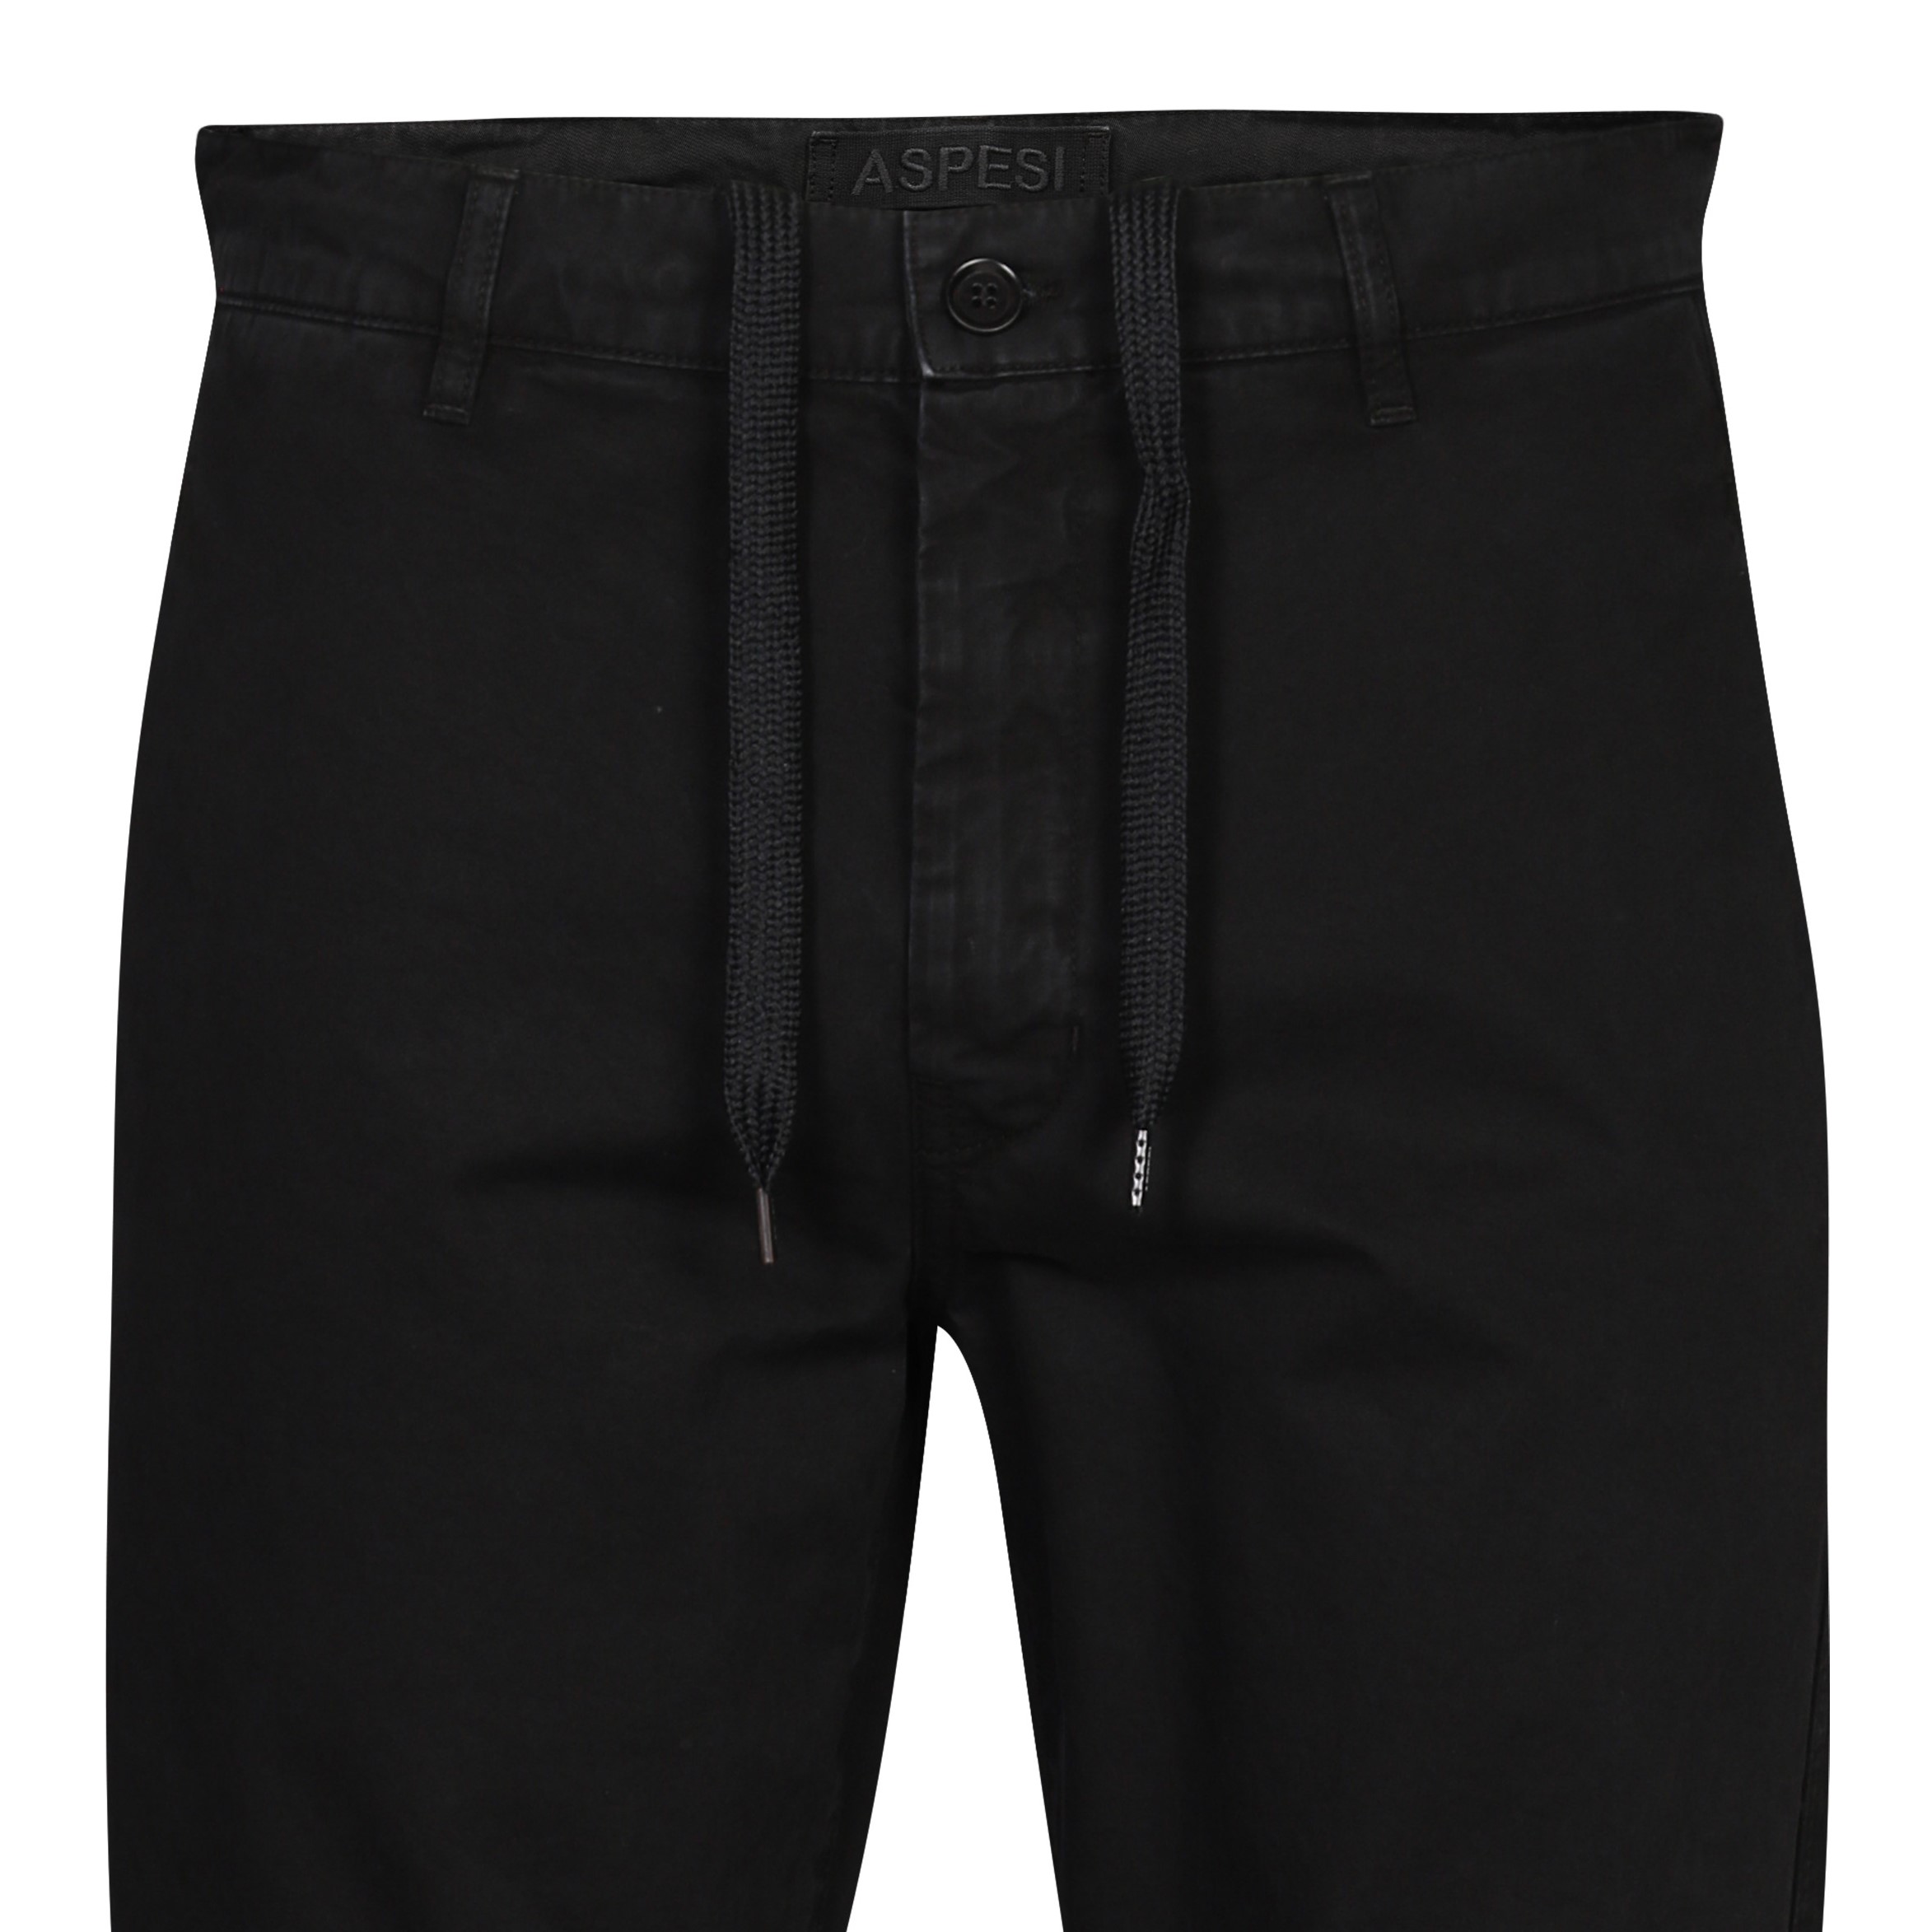 Aspesi Cotton Pant in Black